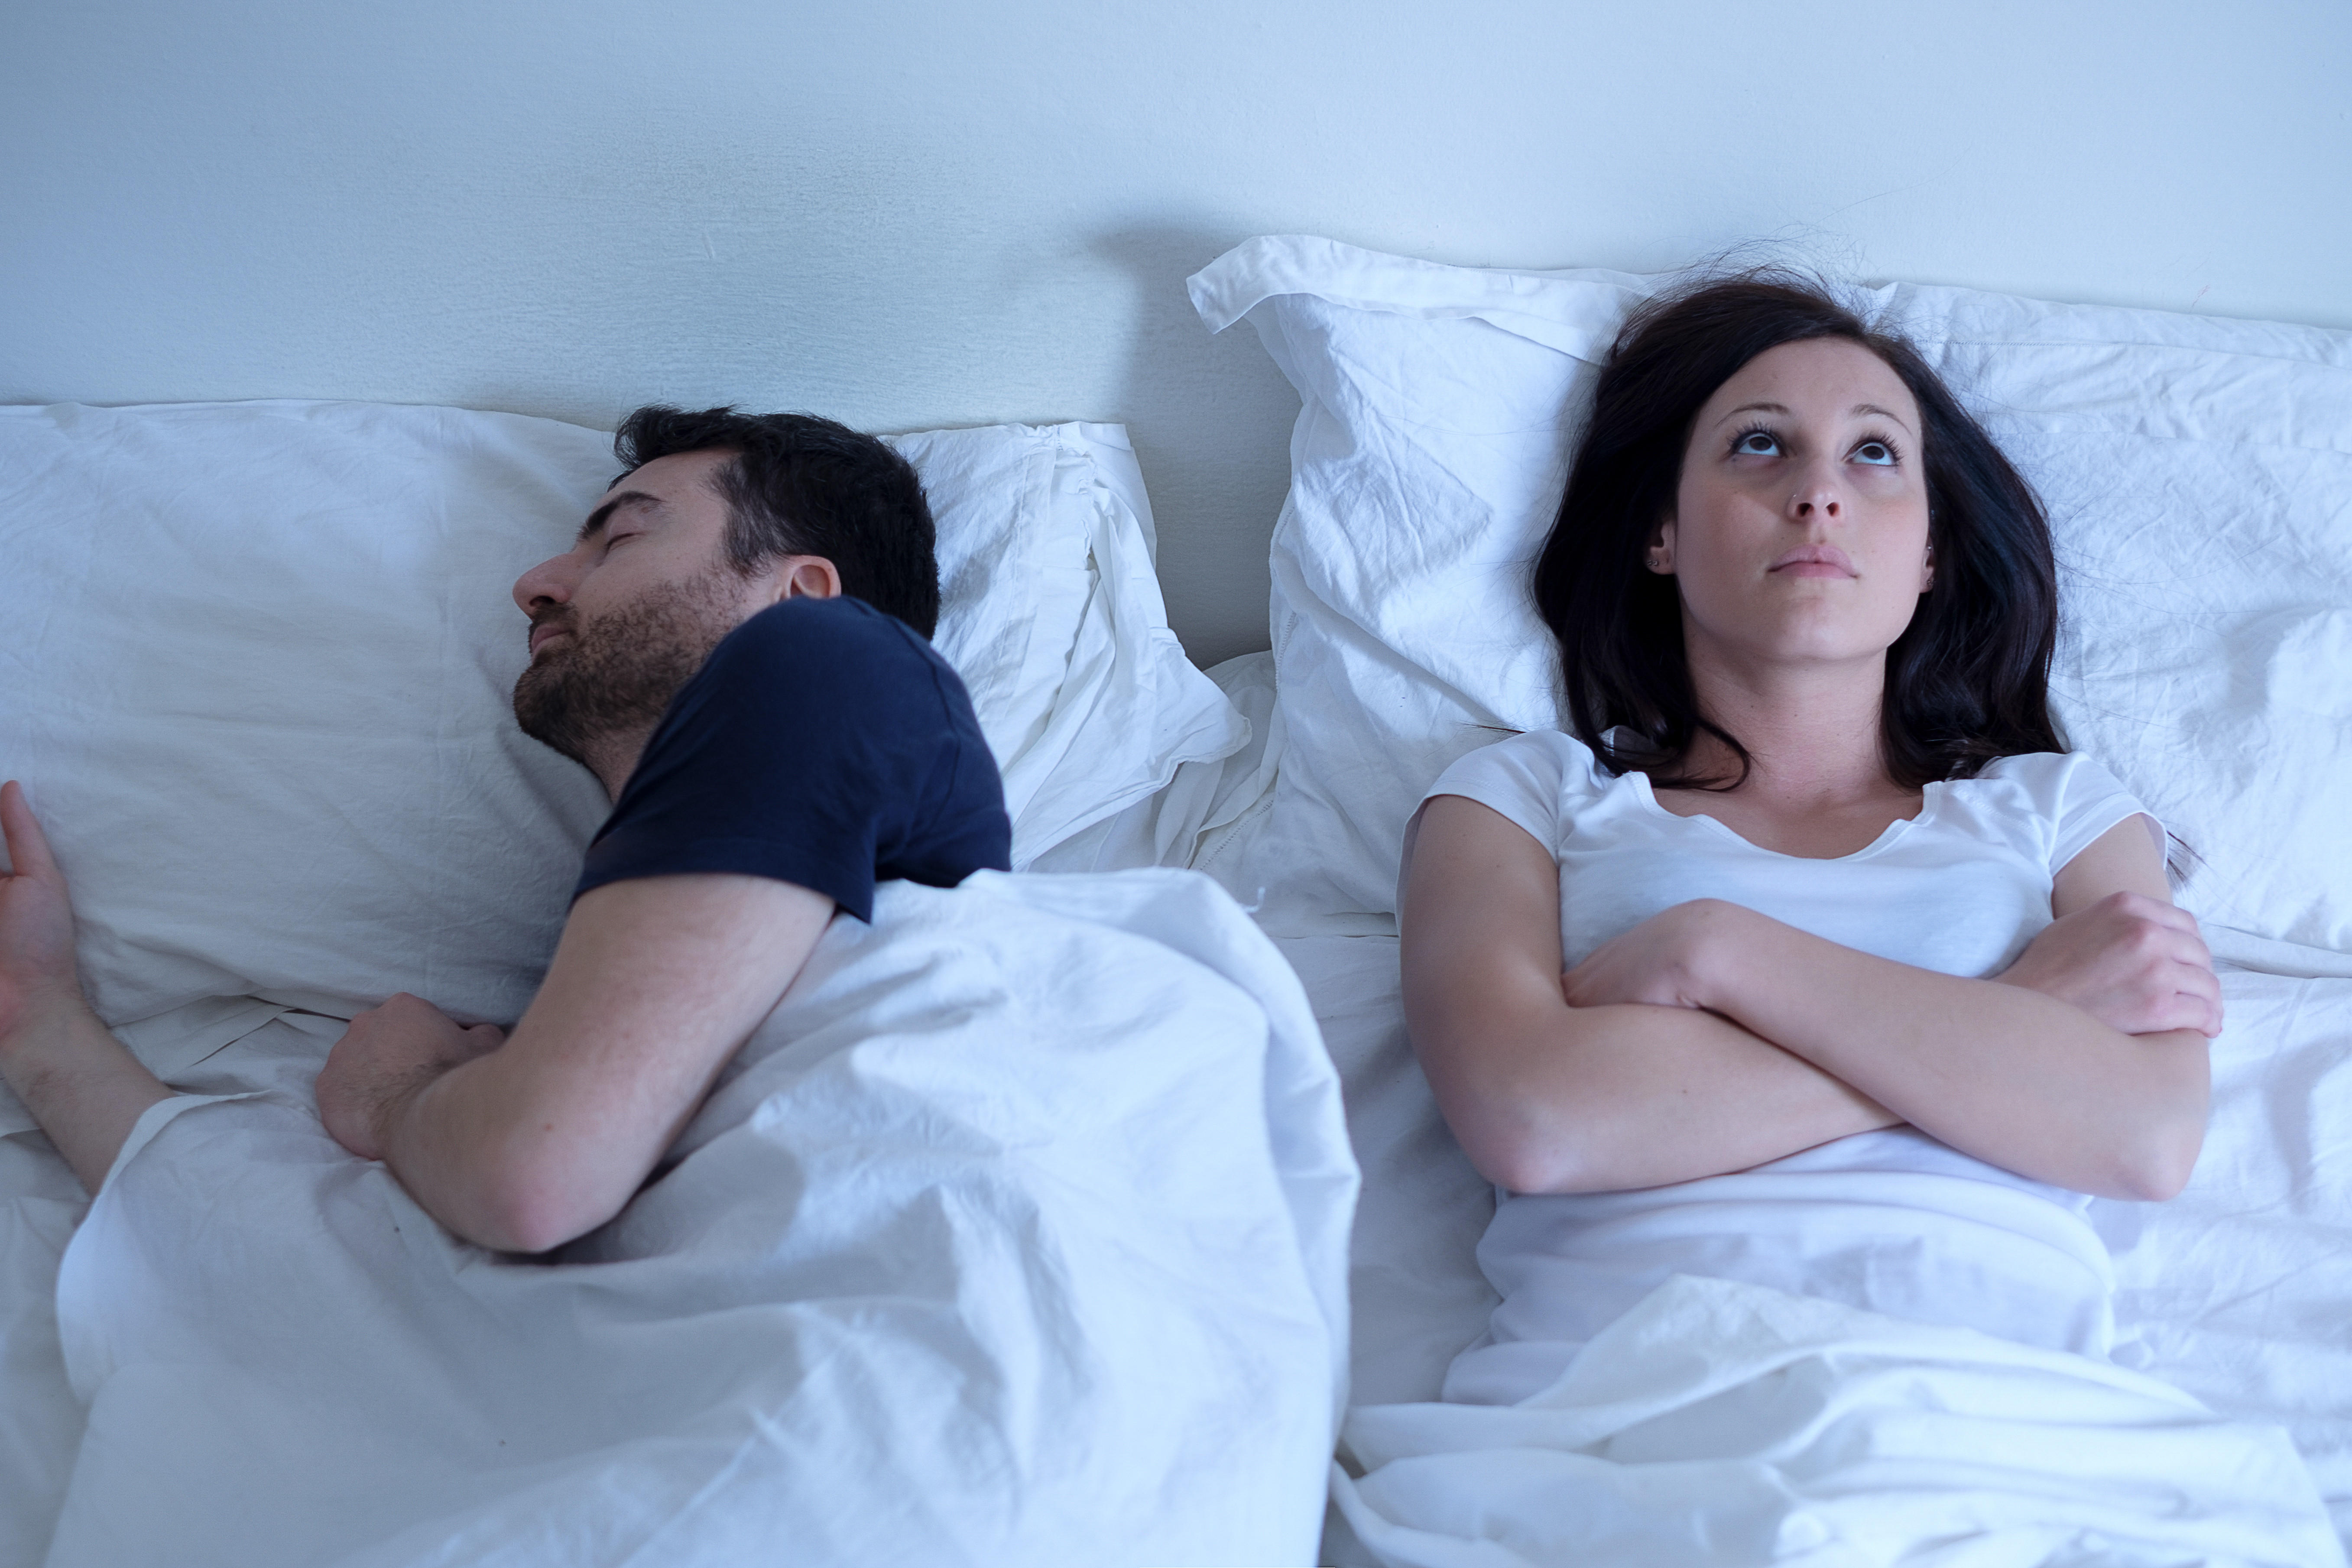 Sad and thoughtful woman awake while husband is sleeping in bed